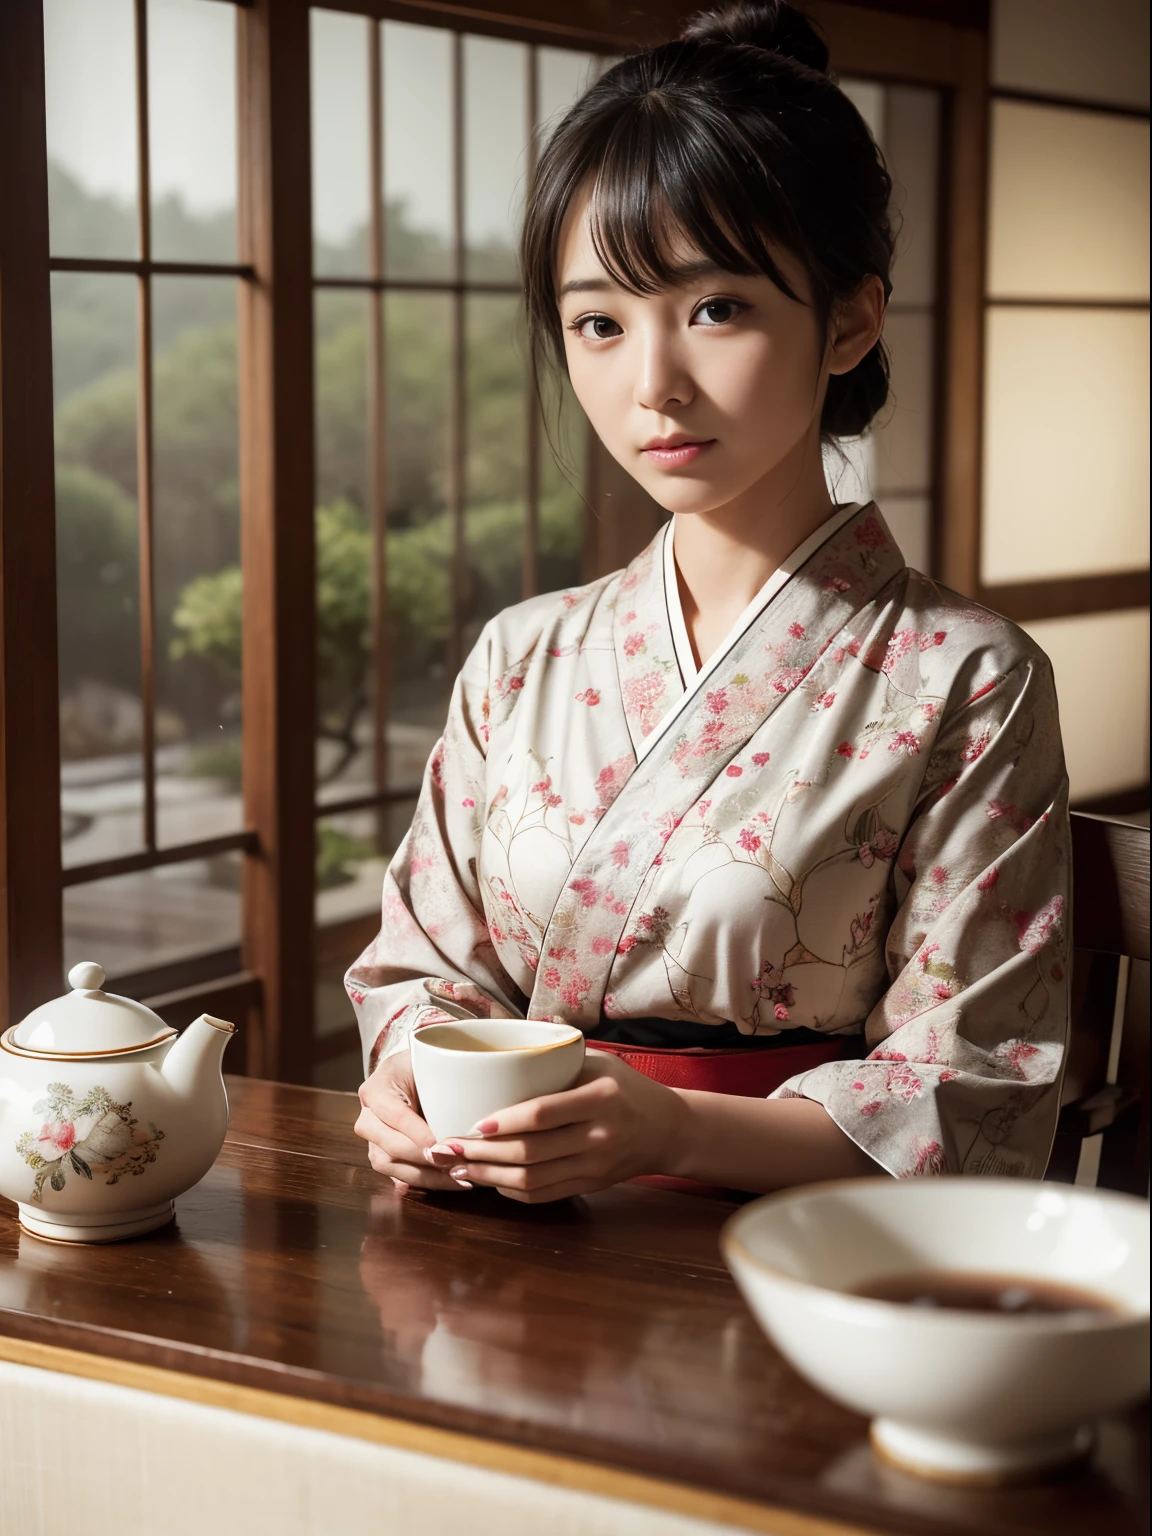 (8K, 最好的品質, 超詳細:1.37), (绘里子), 18歲, (日本茶道愛好者), 在優雅的茶館享受傳統的茶會. 她穿著漂亮的和服, 表現出她對日本文化的欣賞. 高解析度影像捕捉超詳細的真實感, emphasizing 绘里子's captivating eyes, 無瑕膚色, 還有她品茶時平靜的表情. 精心打造的茶館, 其複雜的細節和寧靜的氛圍, 增加了場景的真實性, showcasing 绘里子's passion for the art of tea.